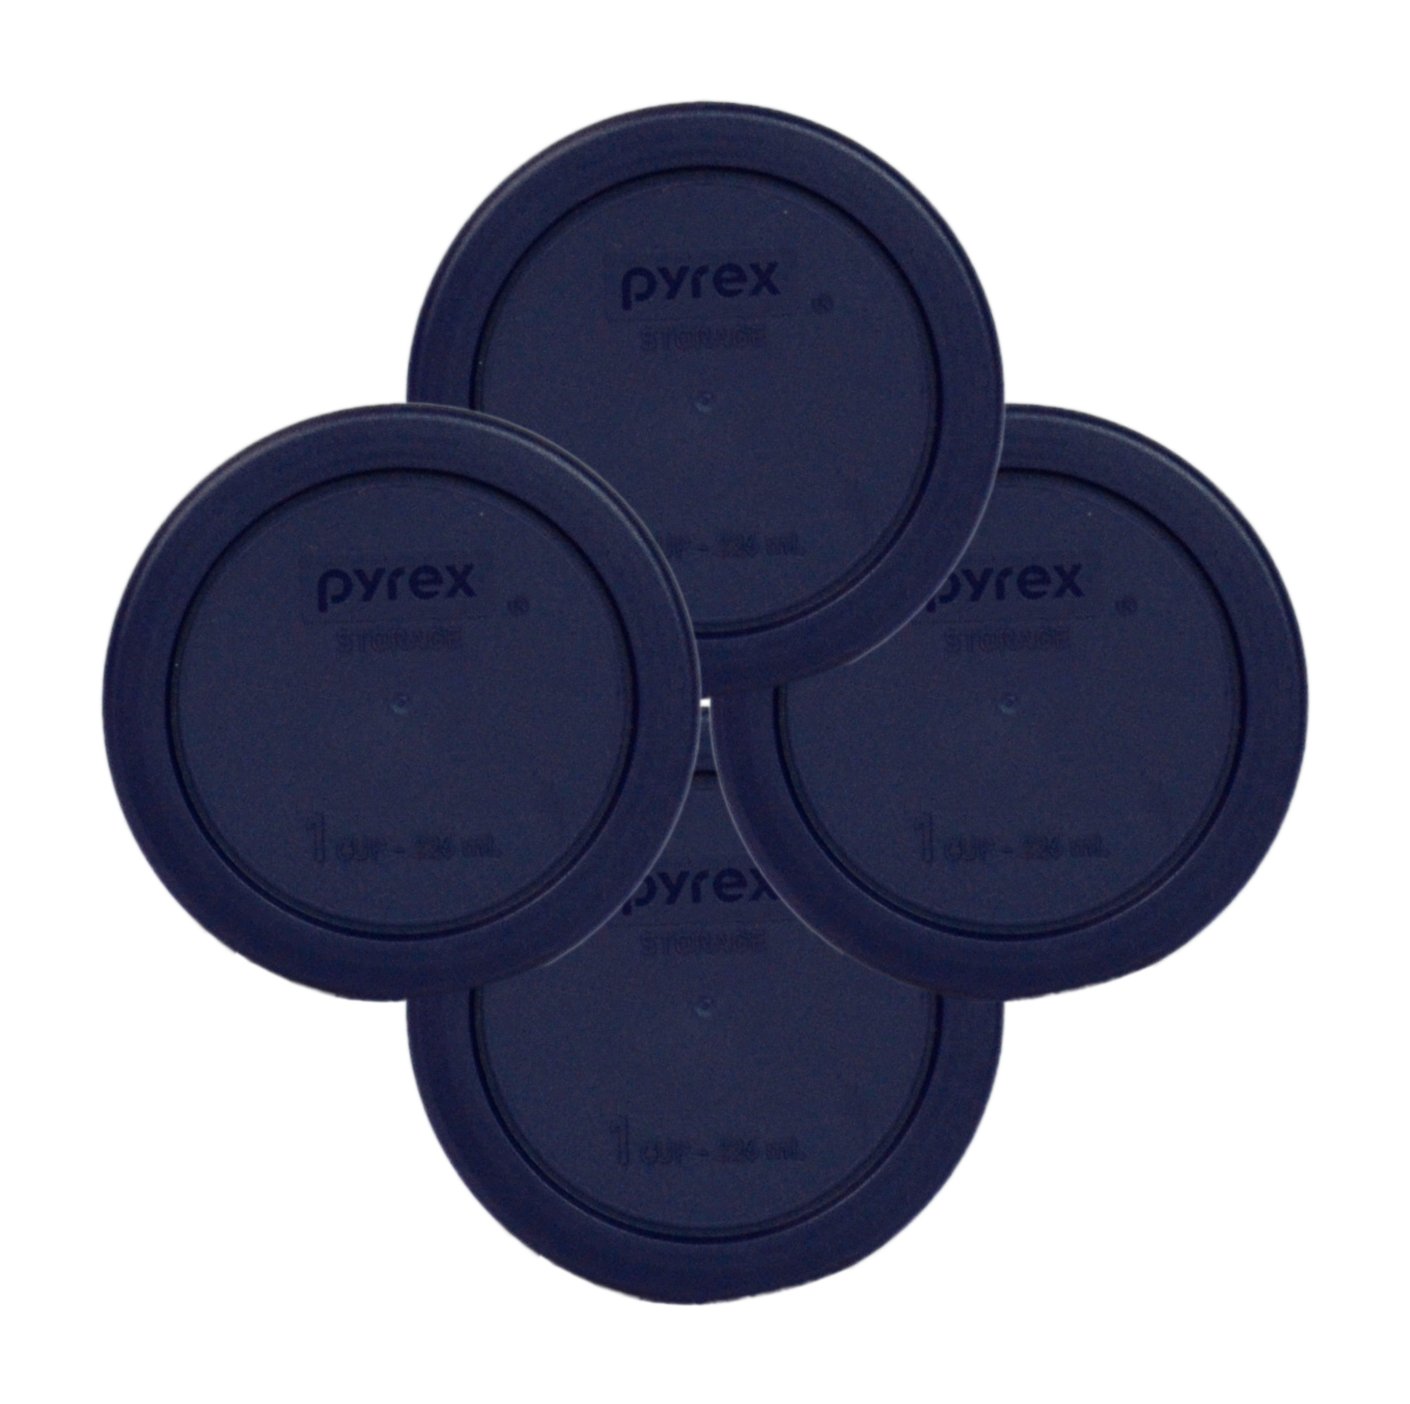 Pyrex 7202-PC 1113805 1 Cup Dark Blue Lid (4-Pack)